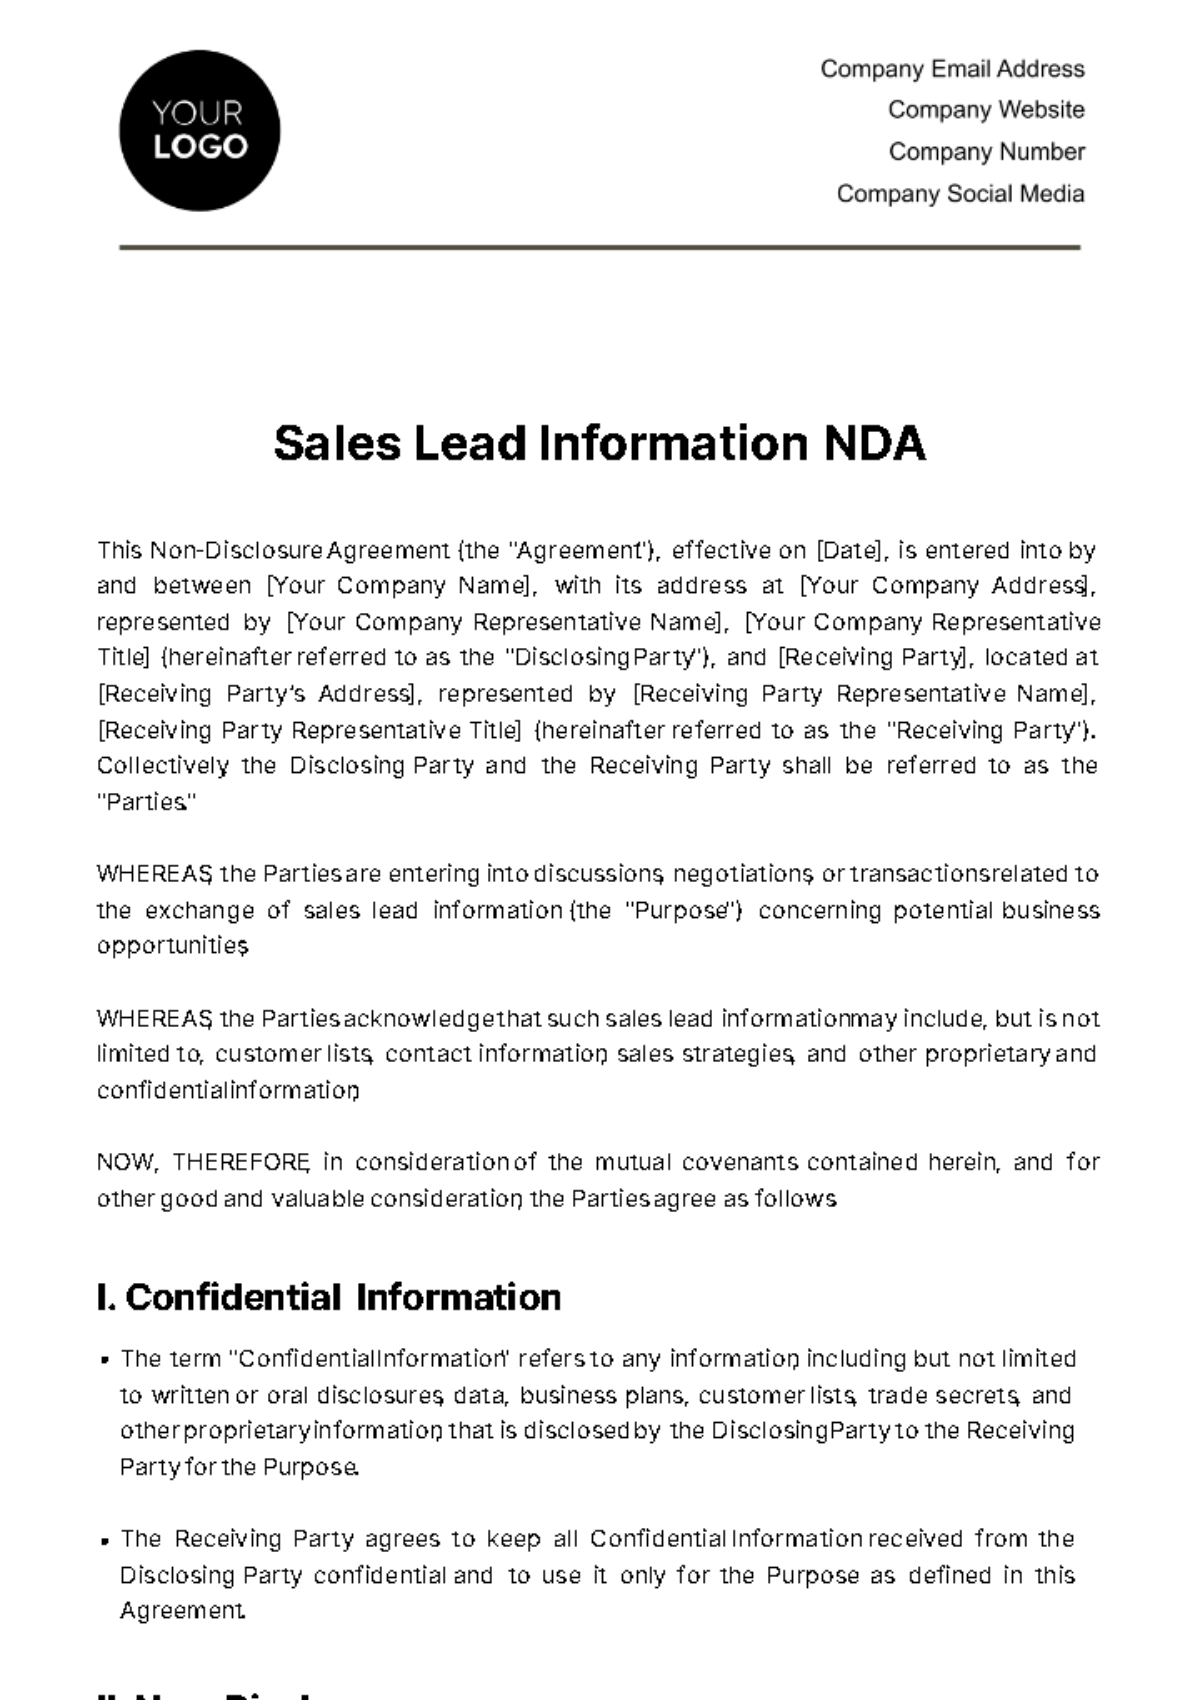 Free Sales Lead Information NDA Template